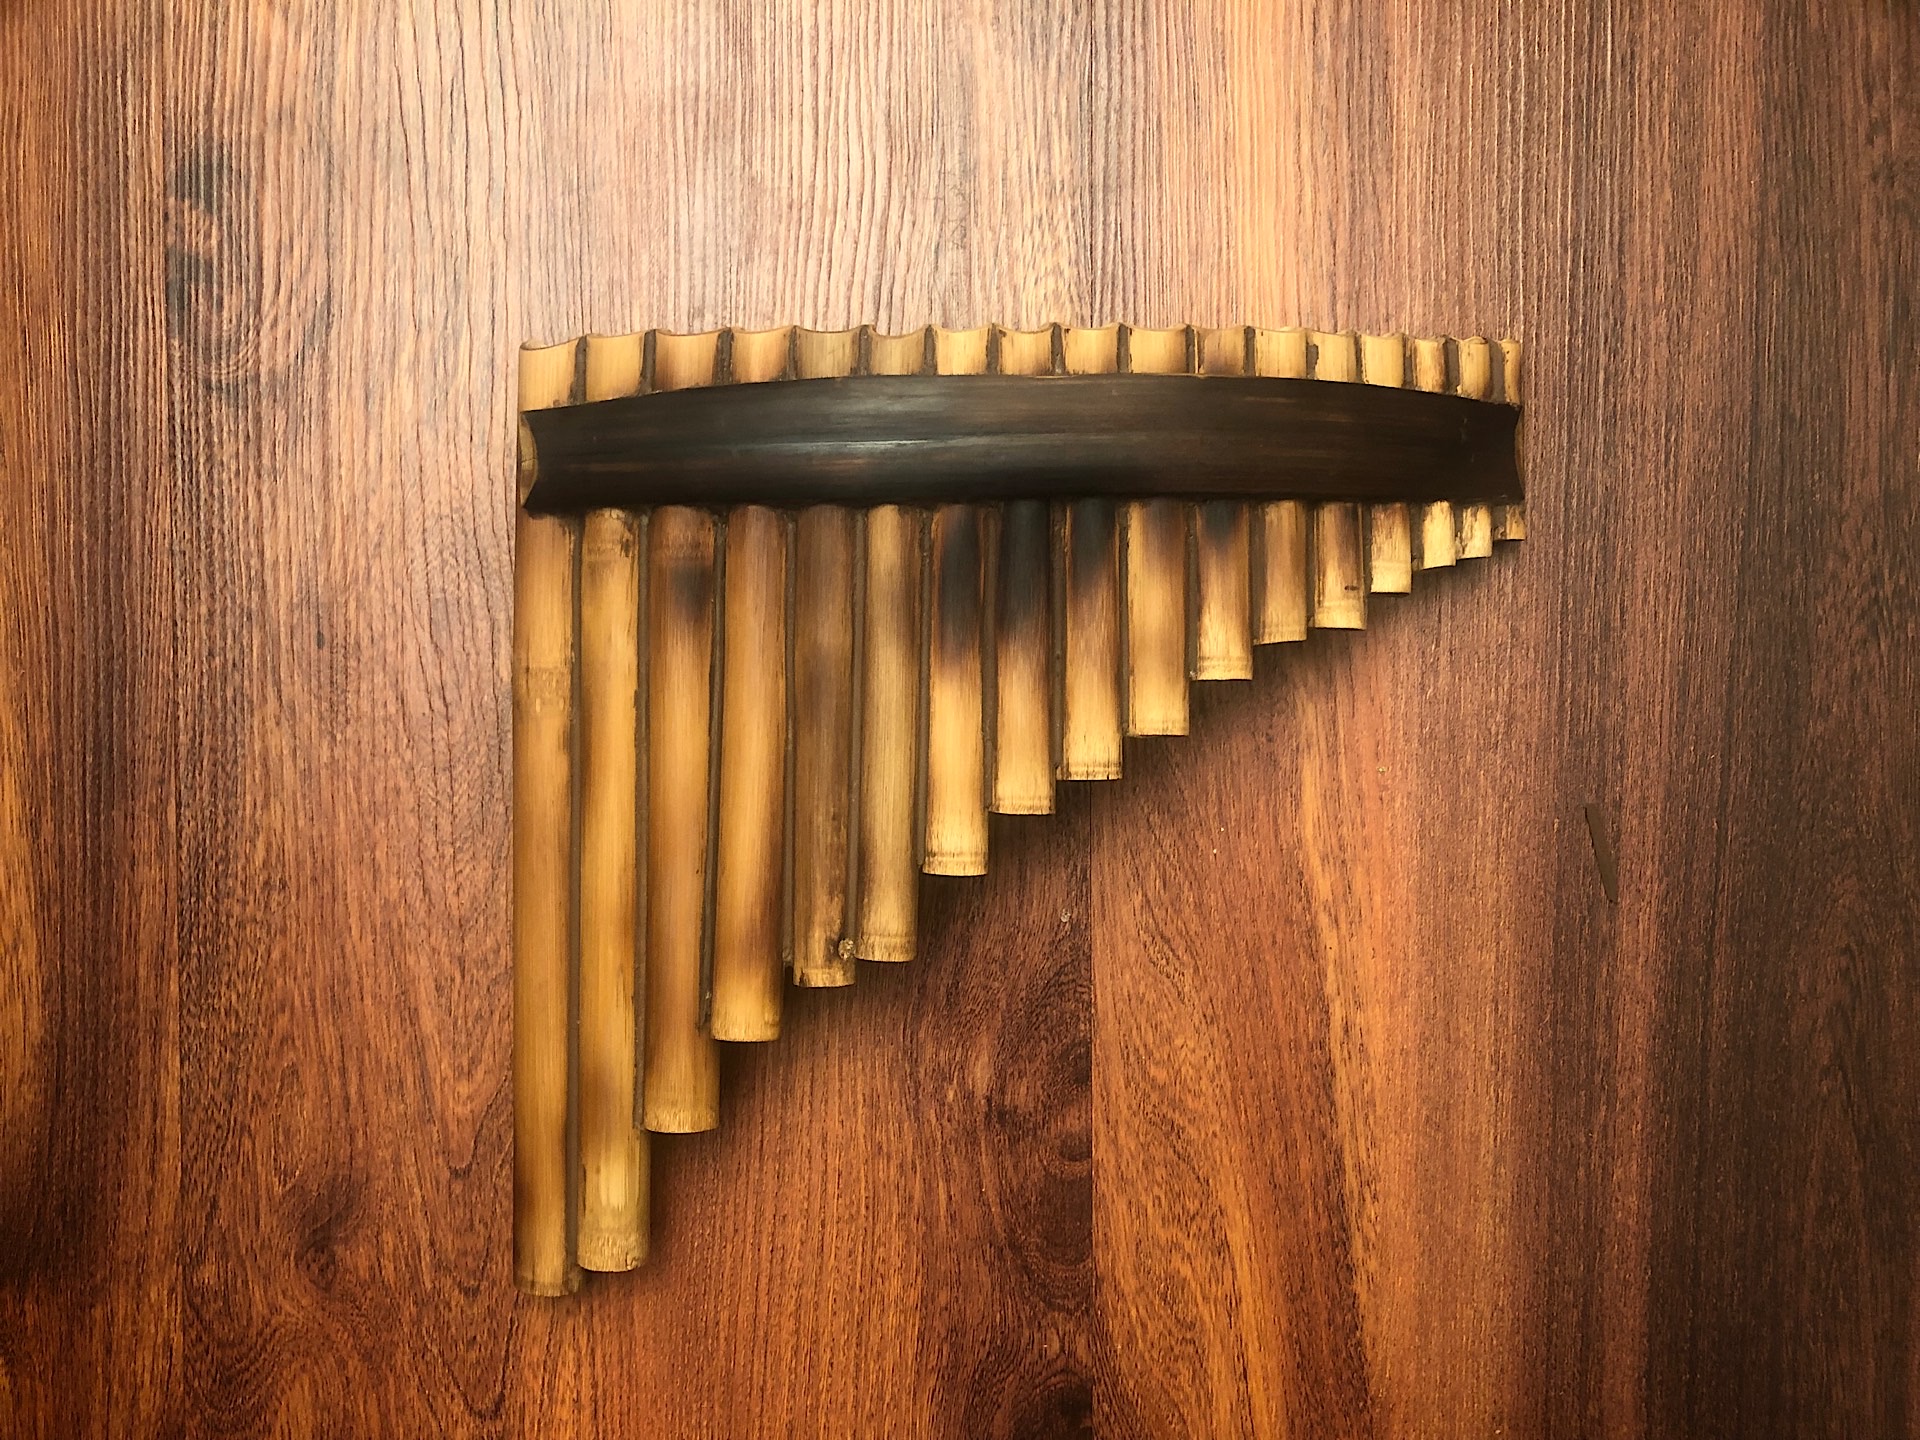 My homemade pan flute